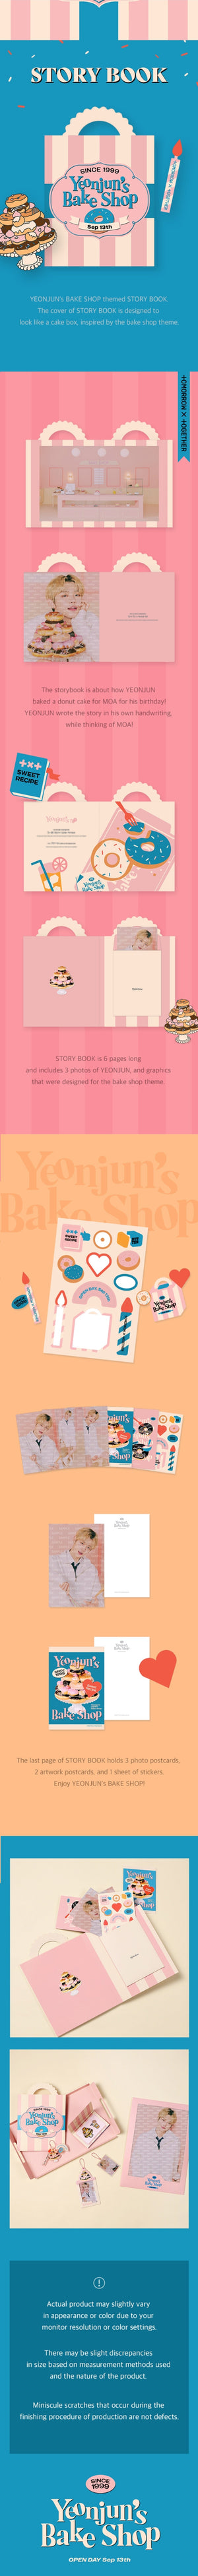 [PR] Weverse Shop MD TXT - BIRTHDAY OFFICIAL MD YEONJUN'S BAKE SHOP